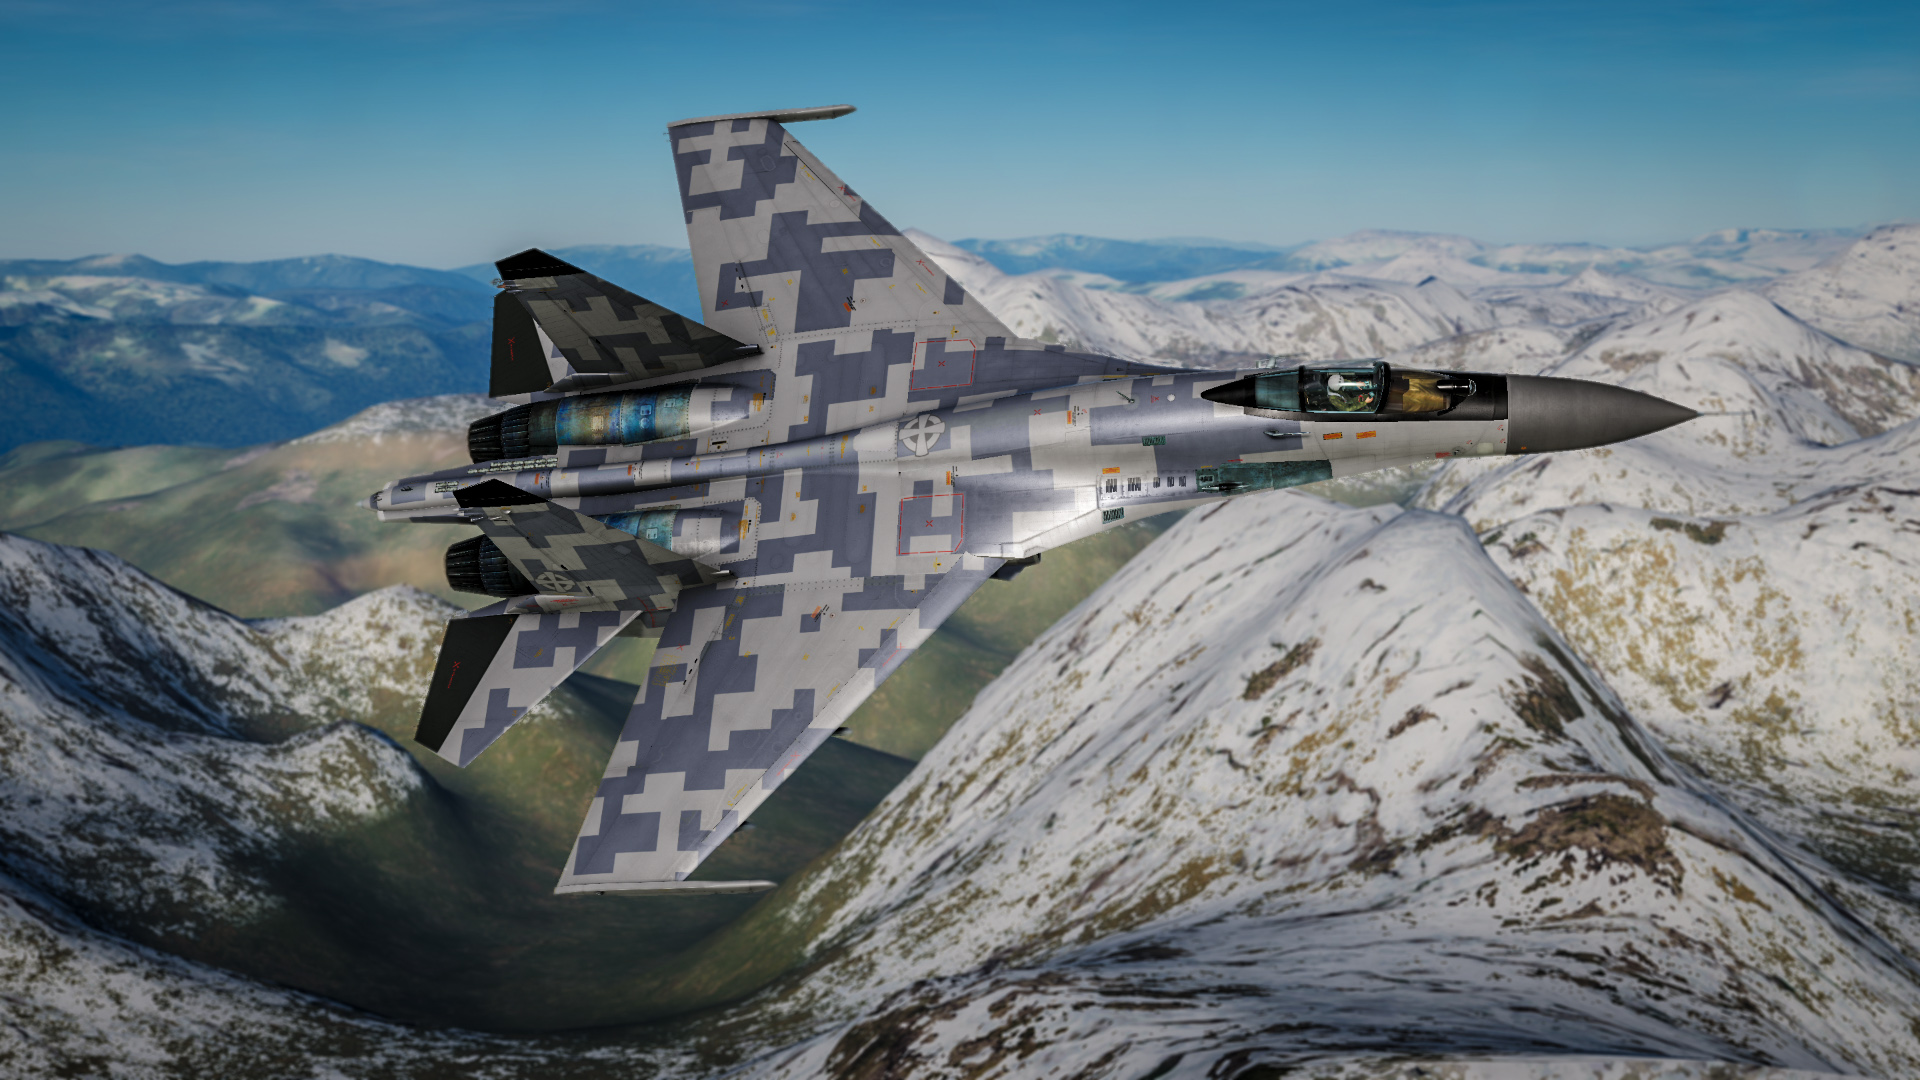 Su-27 Serbian Air Force digital skin fictional